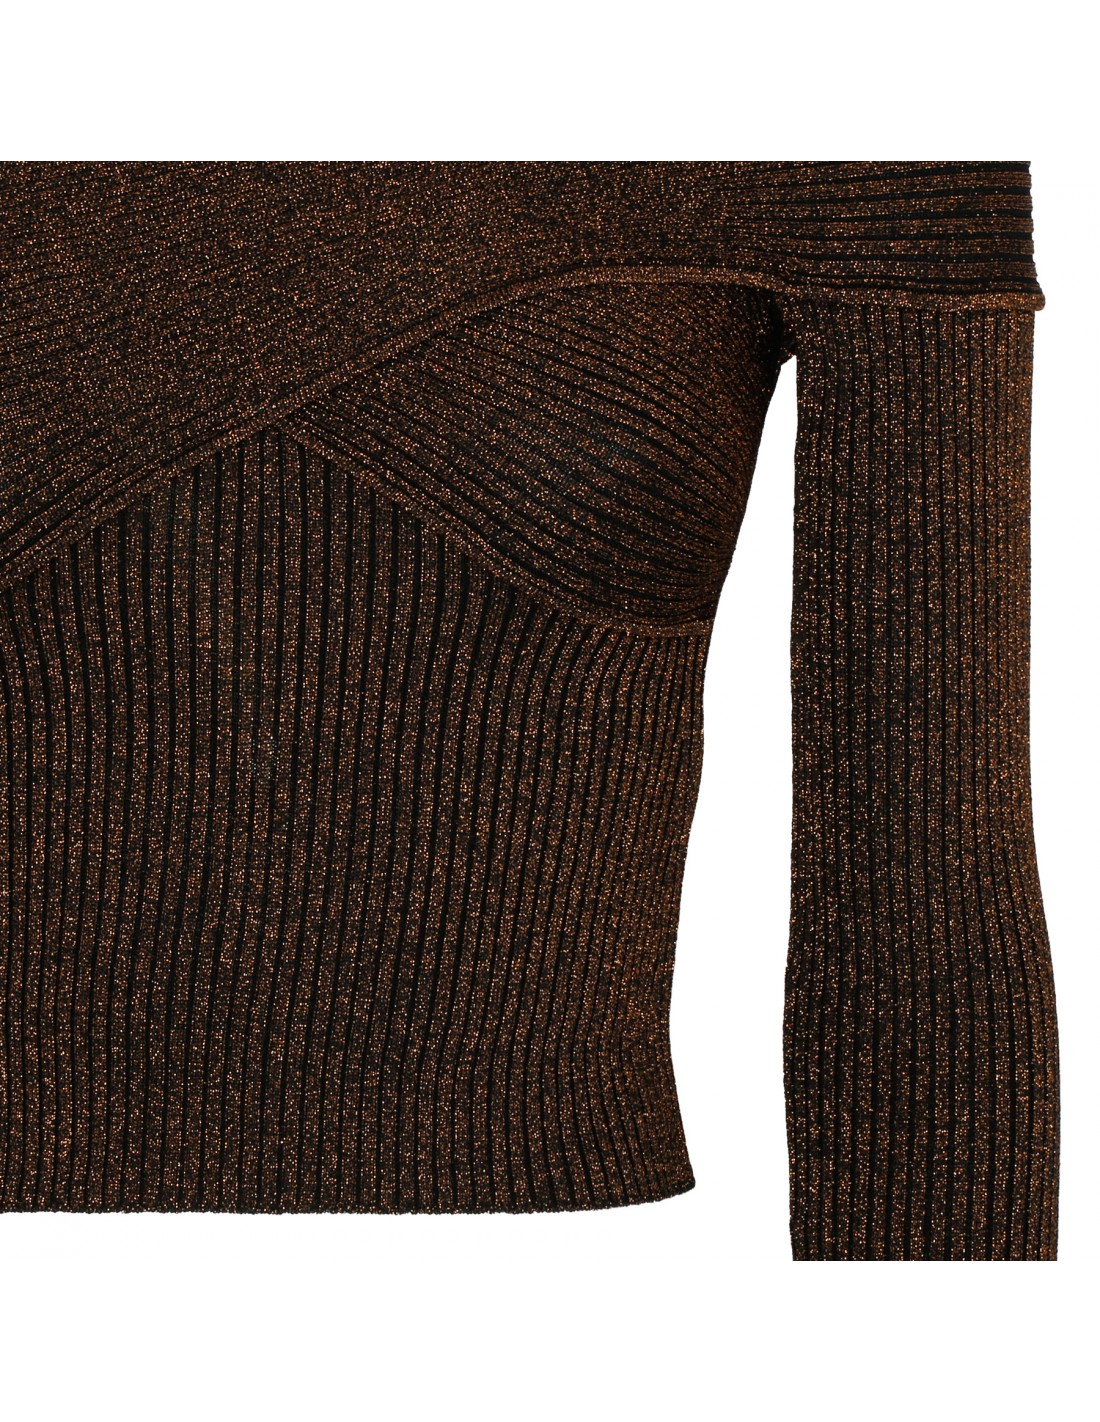 Brown lurex knit top